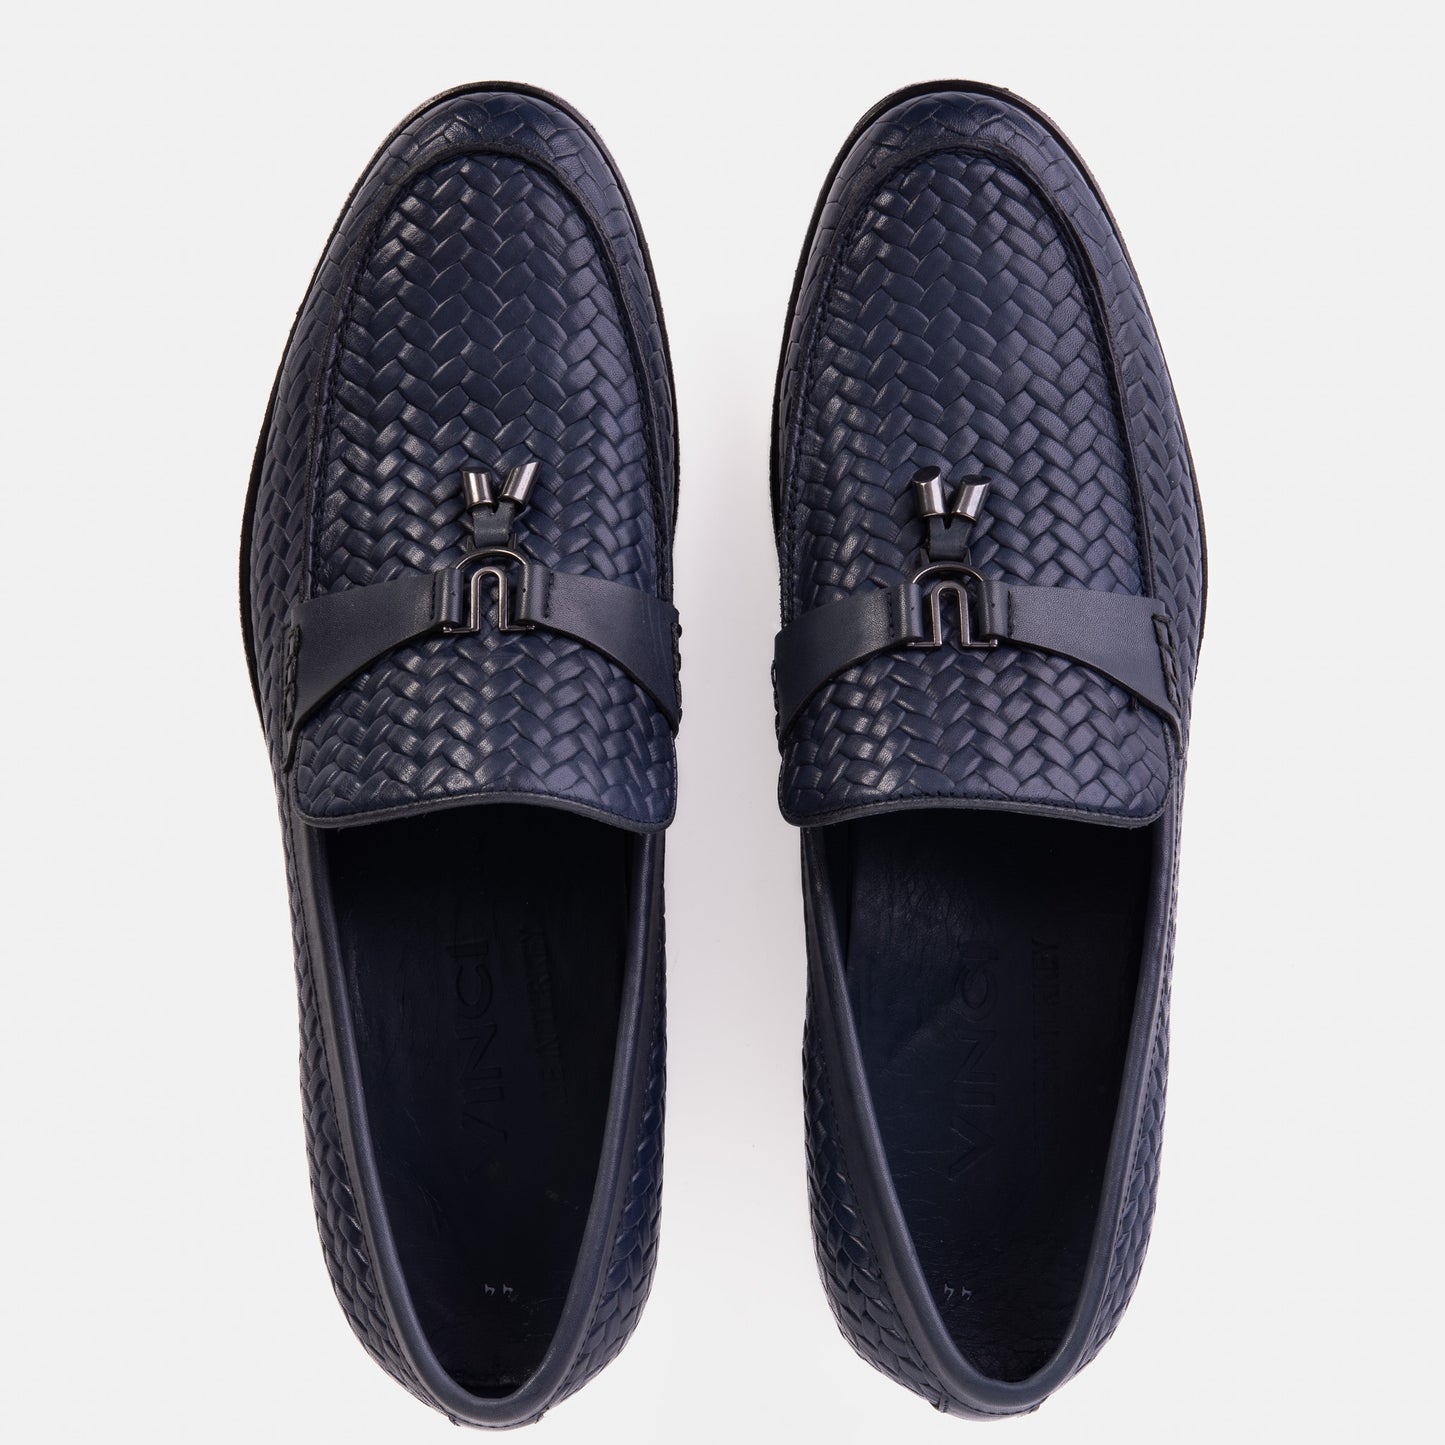 The Sperry Jeans Blue Leather Tassel Loafer Men Shoe